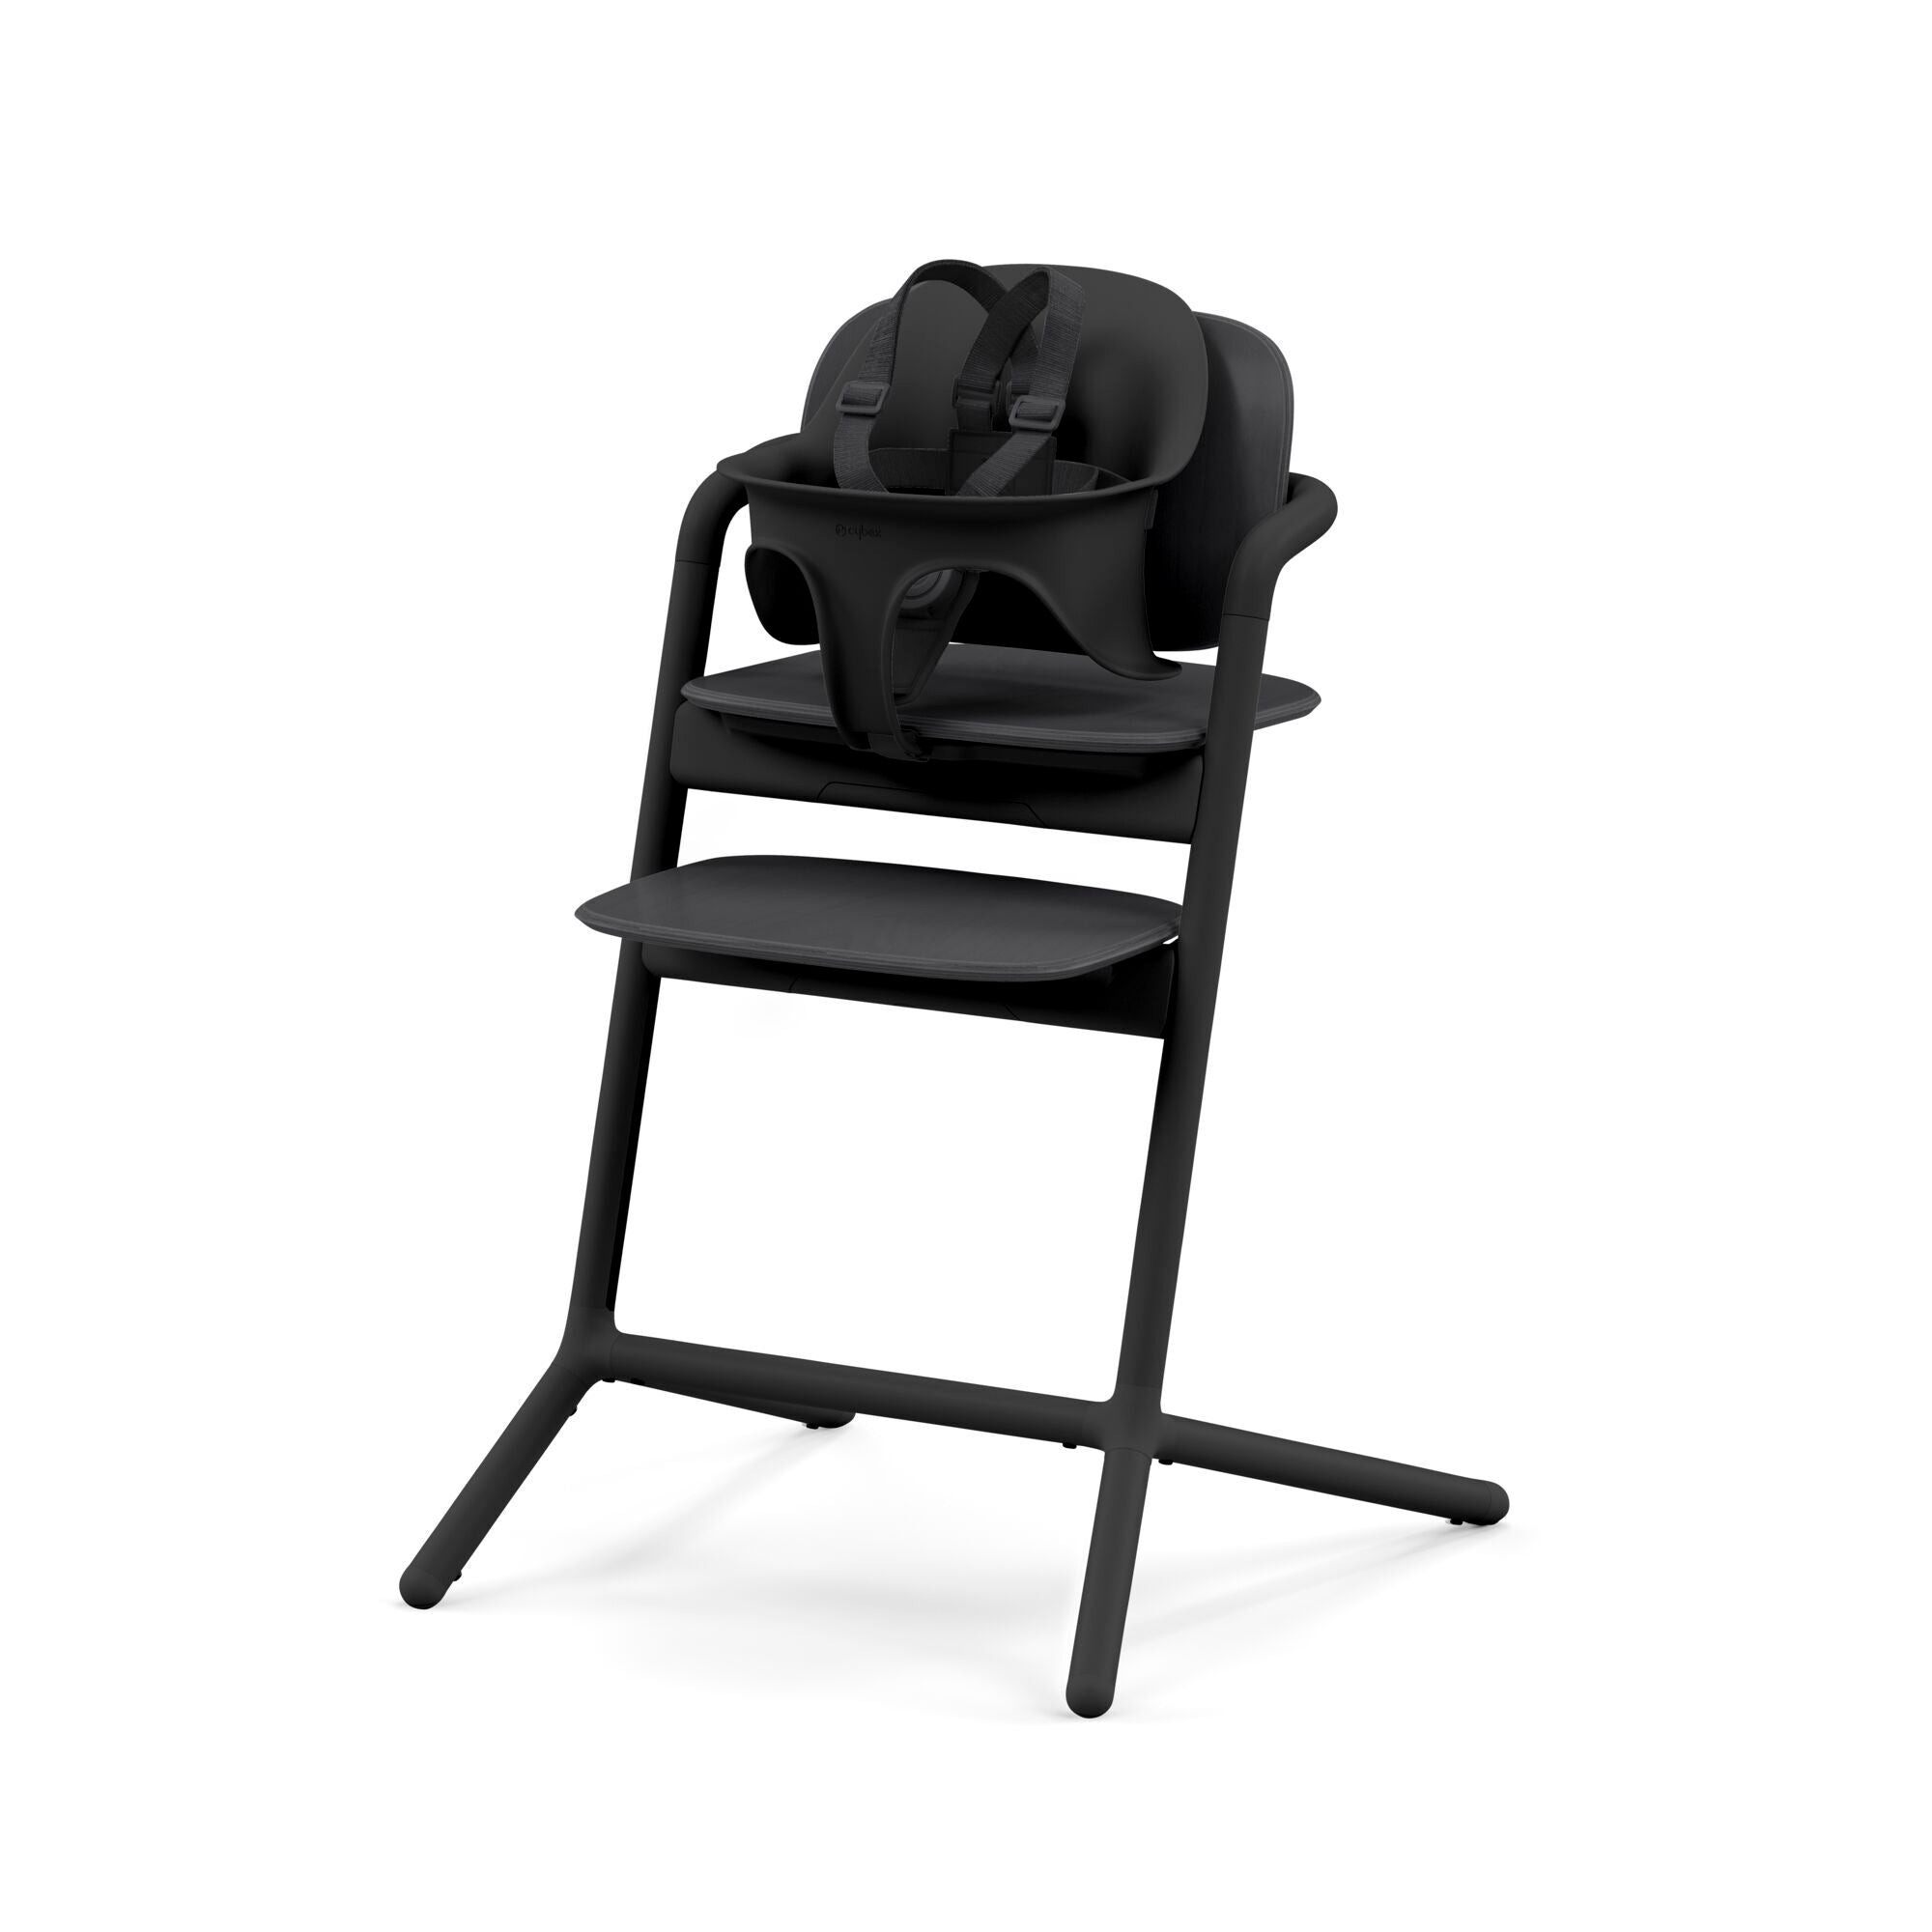 Cybex Lemo 2 High Chair 4-in-1 - ANB Baby -40638462210594 in 1 high chair